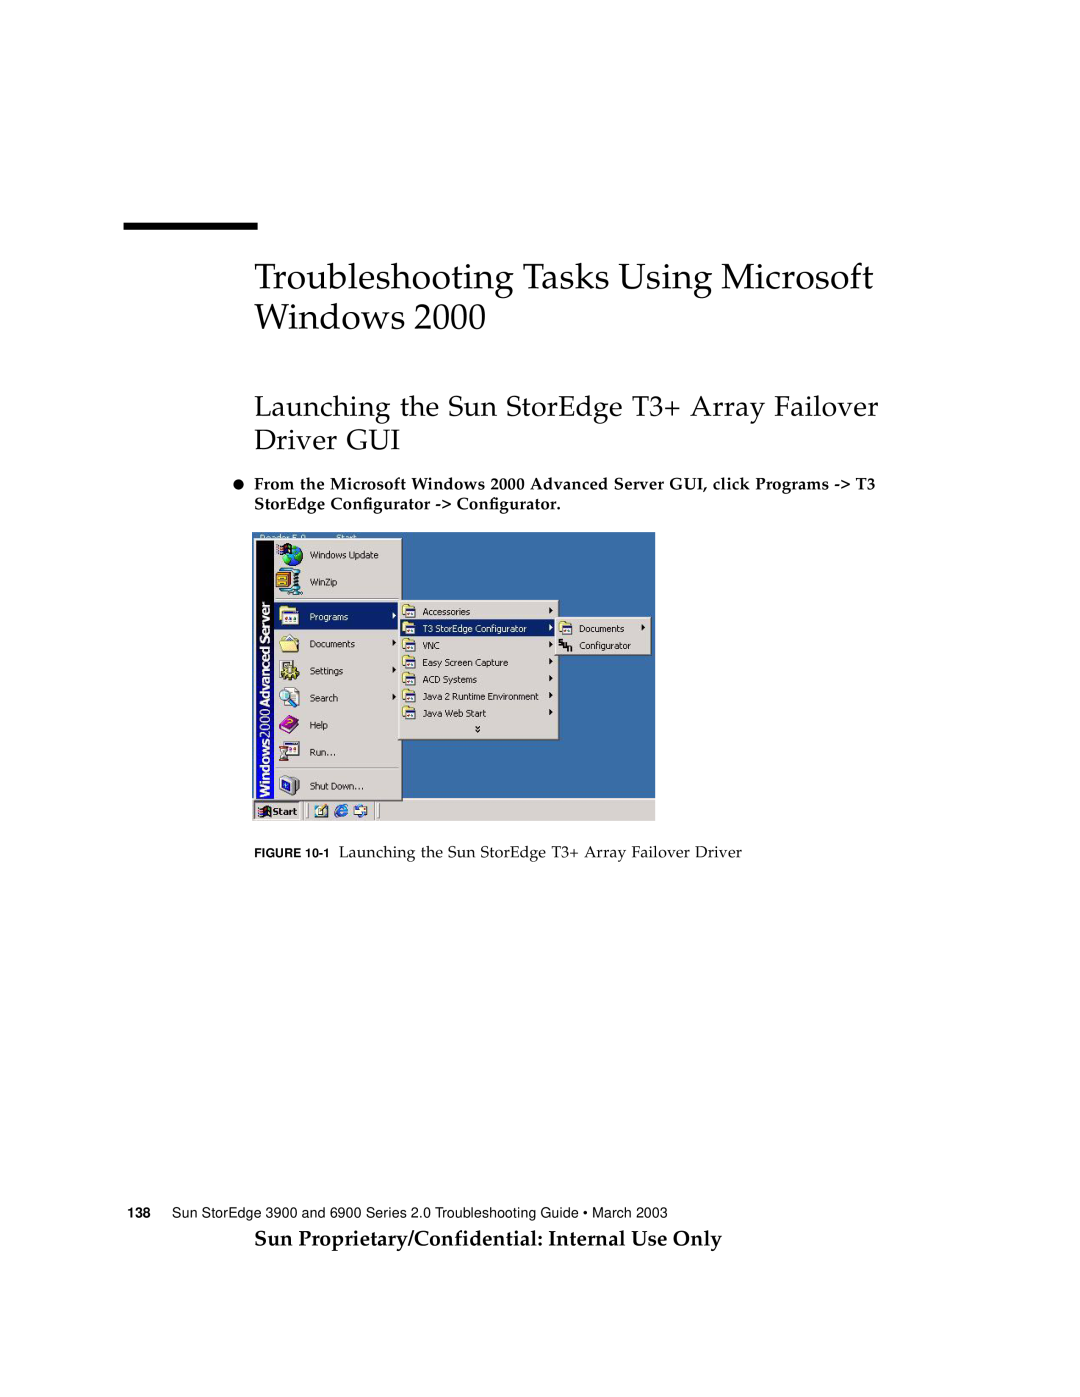 Sun Microsystems 3900, 6900 Troubleshooting Tasks Using Microsoft Windows, Sun Proprietary/Confidential Internal Use Only 